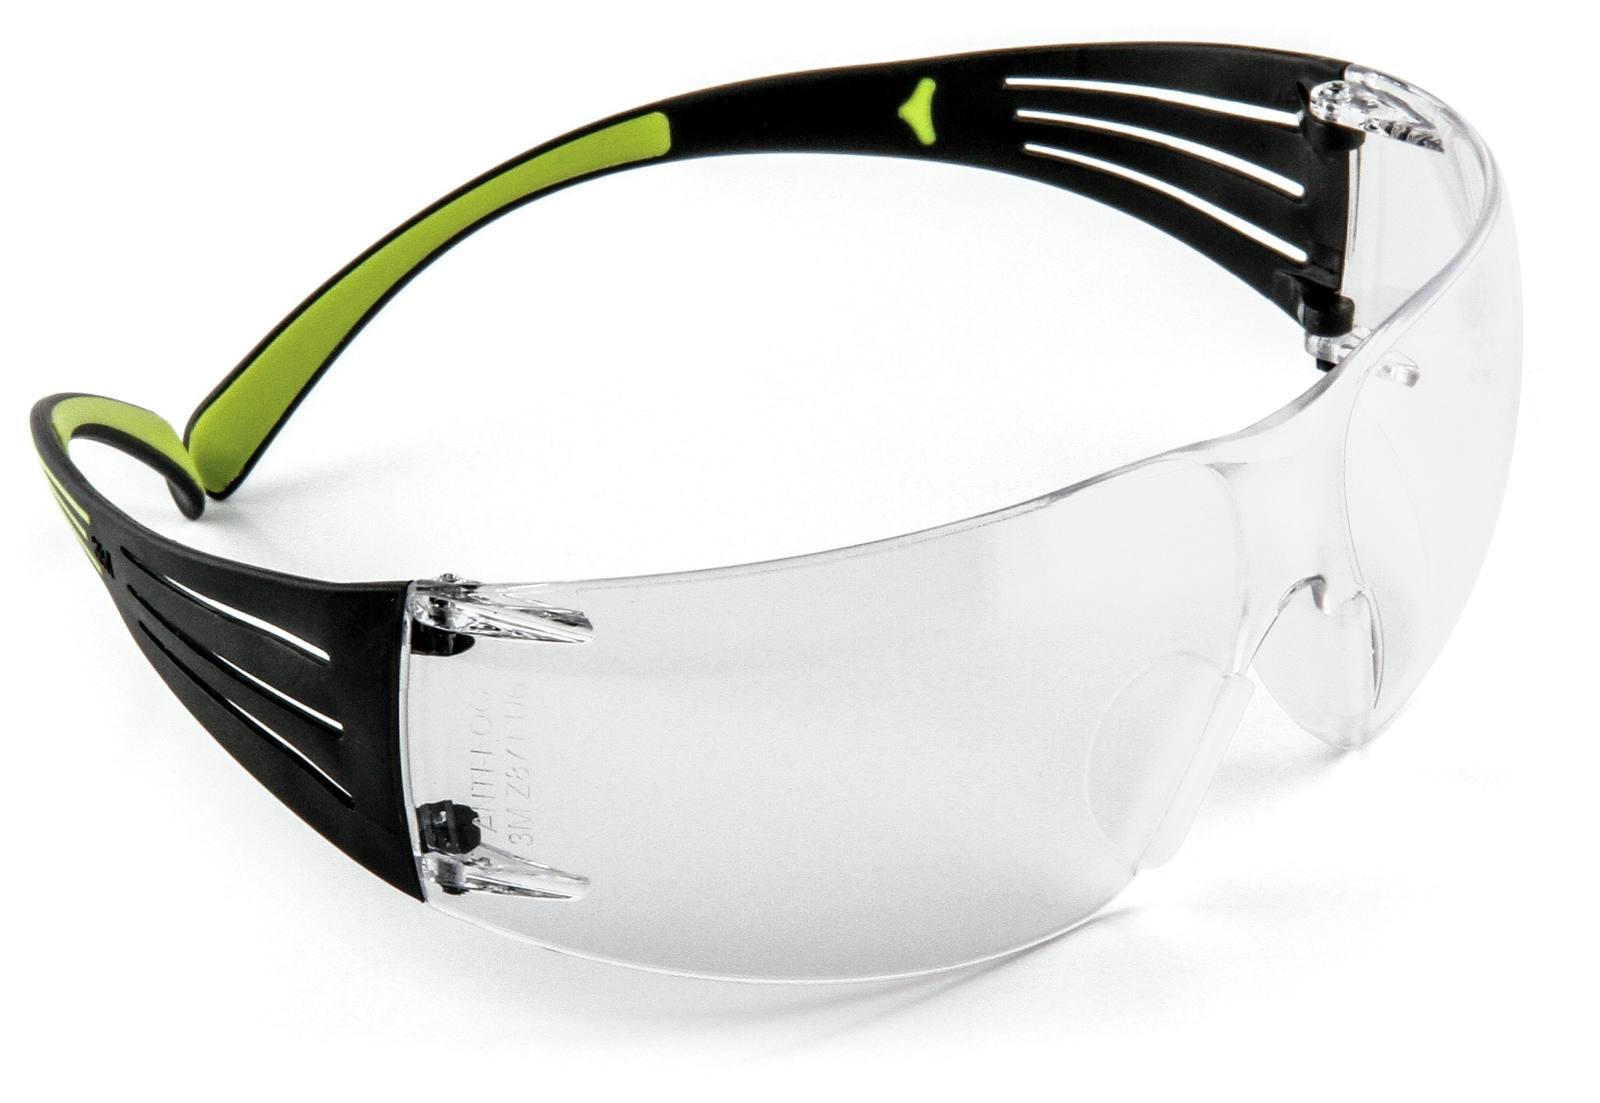 3M SecureFit 400 Schutzbrille, schwarz/grüne Bügel, Antikratz-/Anti-Fog-Beschichtung, transparente Scheibe, SF401AS/AF-EU